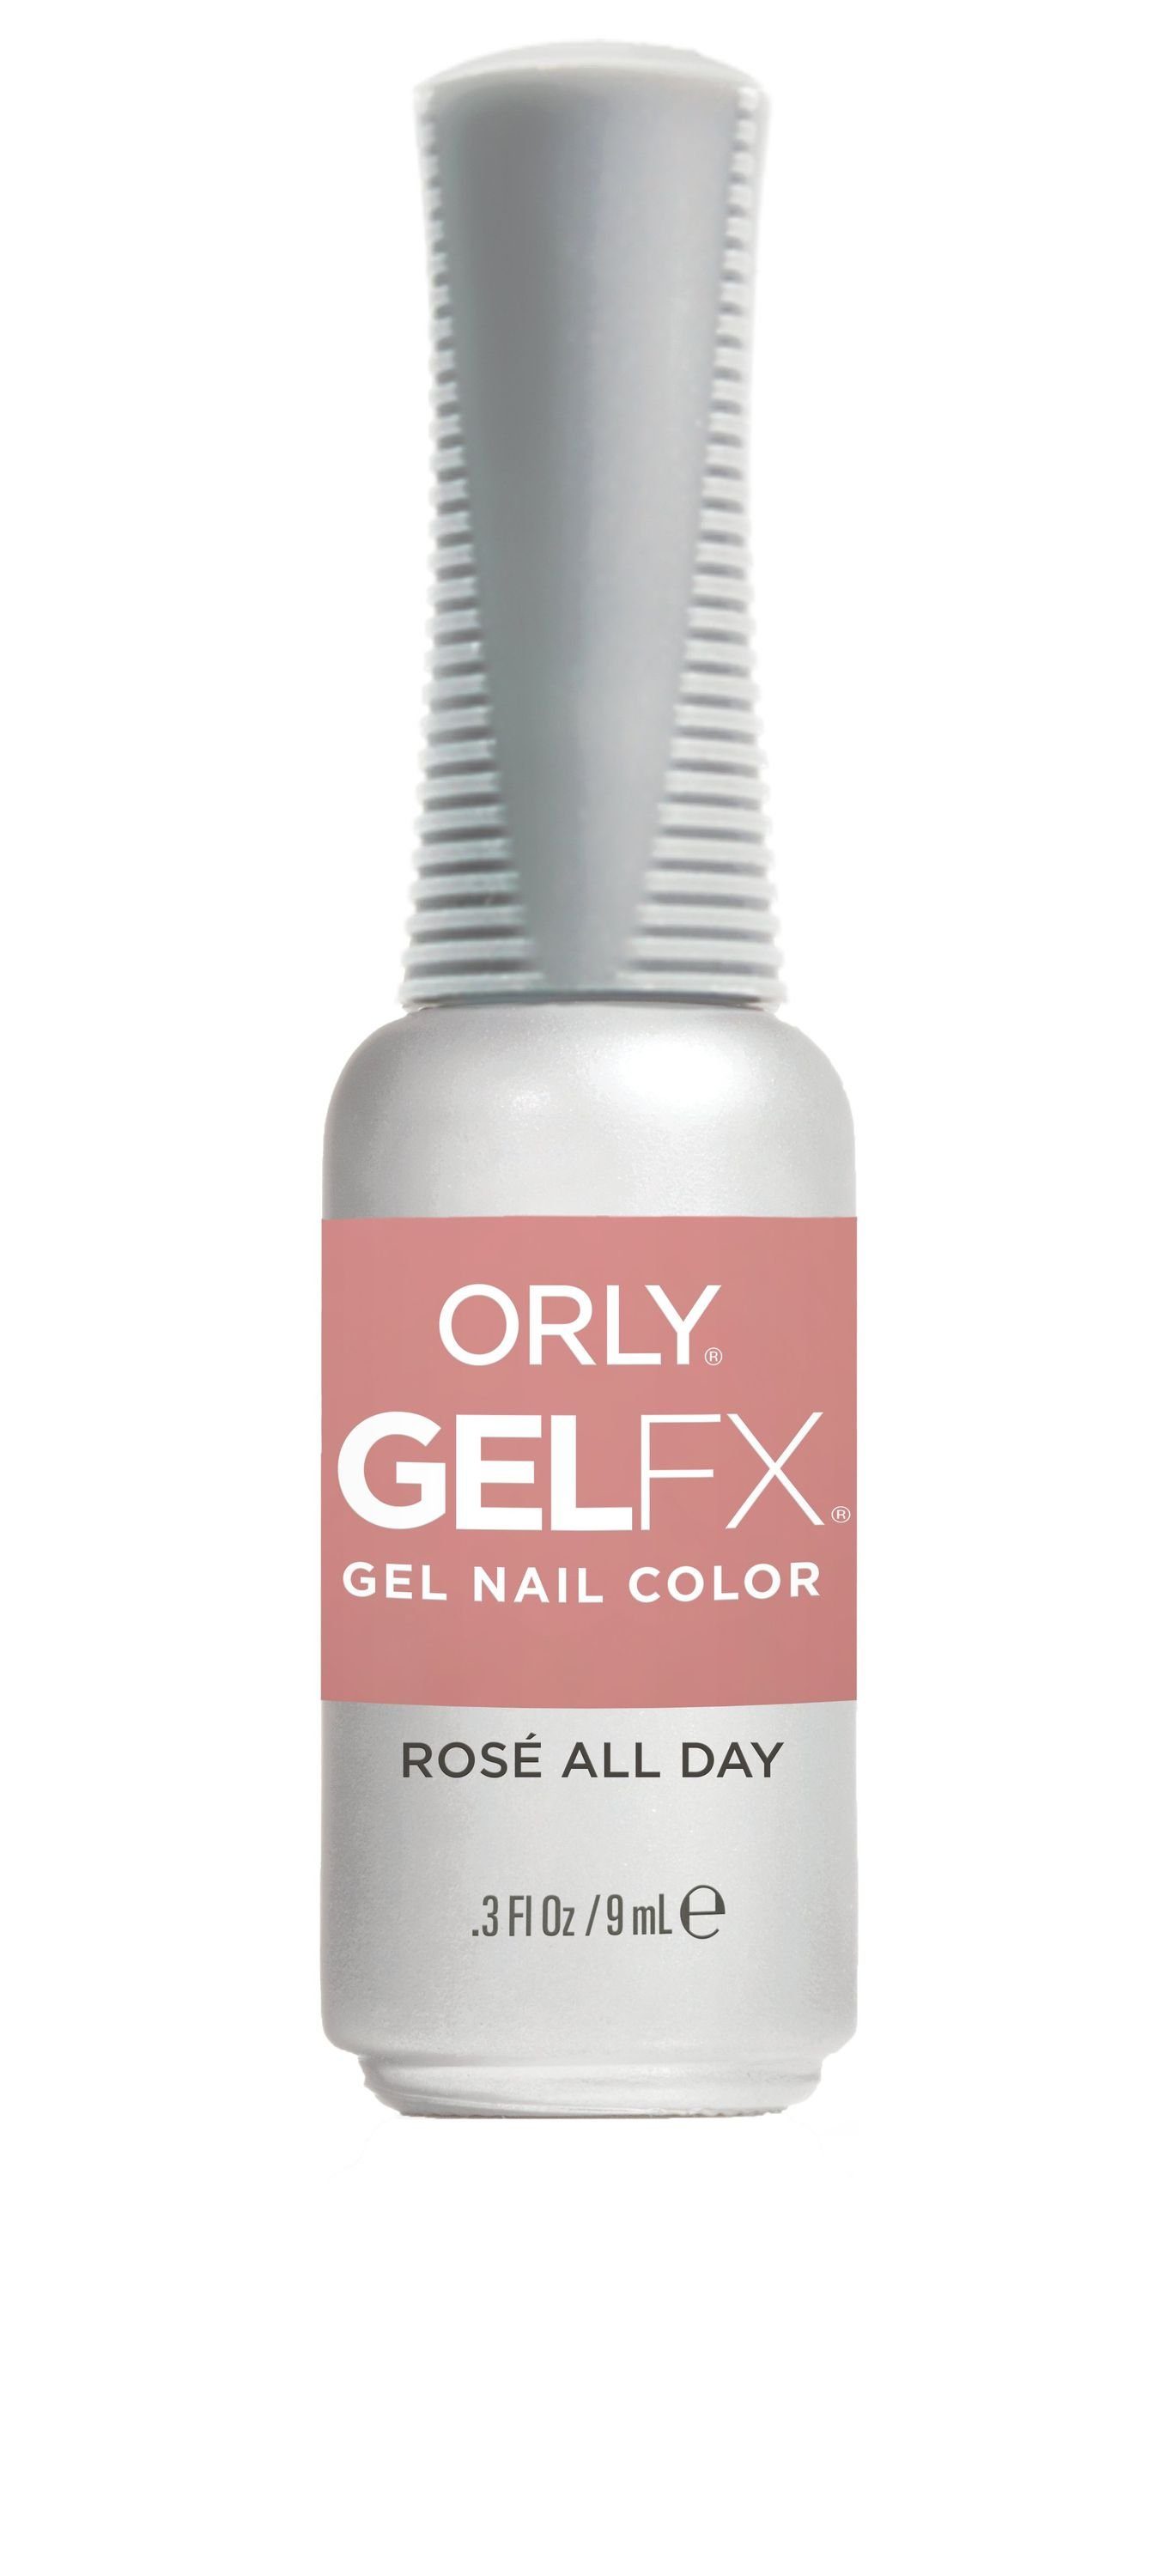 ORLY UV-Nagellack GEL FX Rose All Day, 9ML | Nagellacke